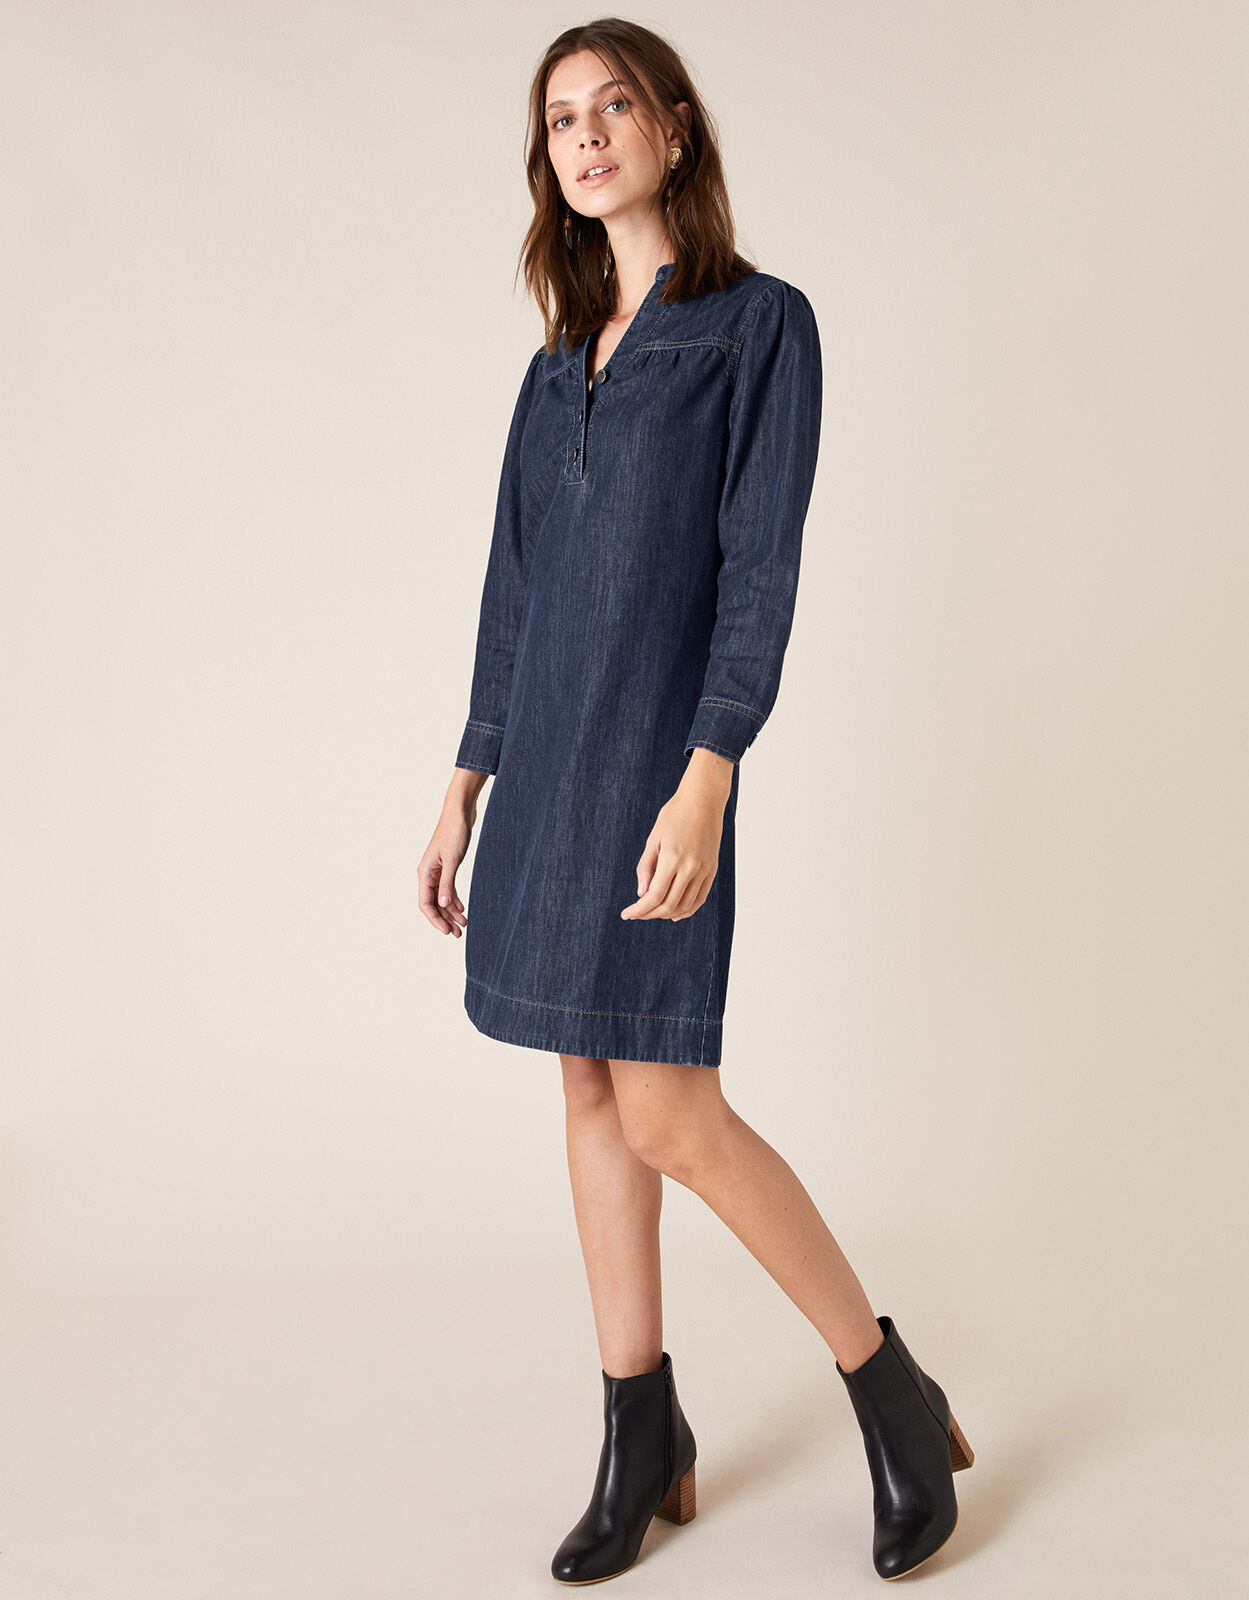 Buy Angreji Girl Knee Length Denim Dress with Pockets Sleeveless Dress Blue  at Amazon.in